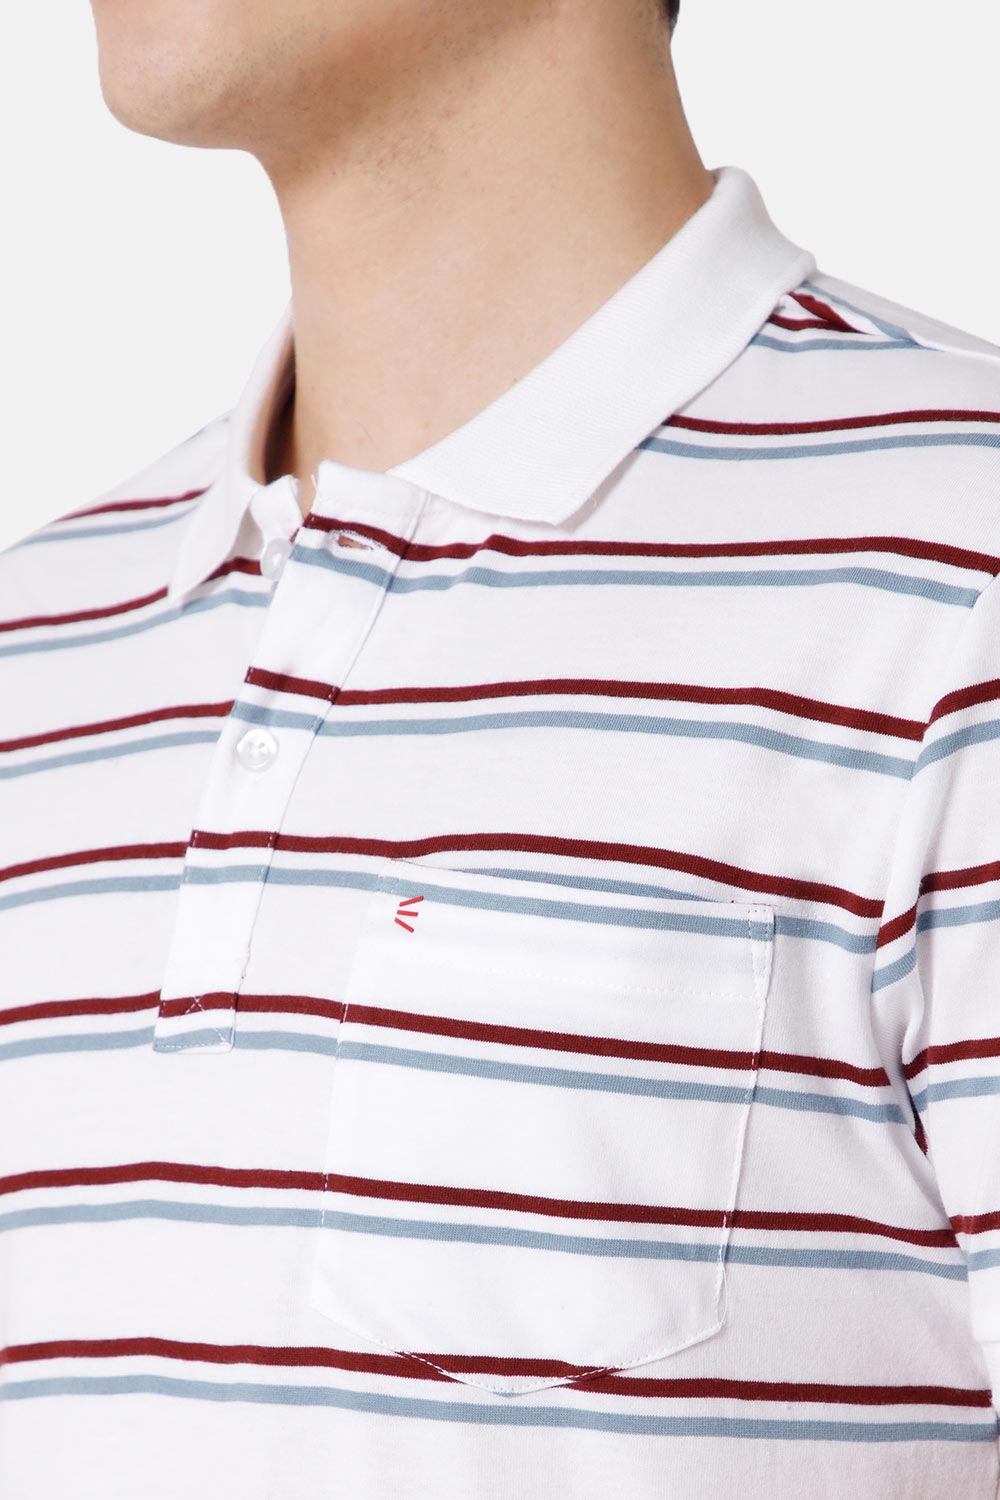 Enhance T-Shirts Men's Polo - White - TS45